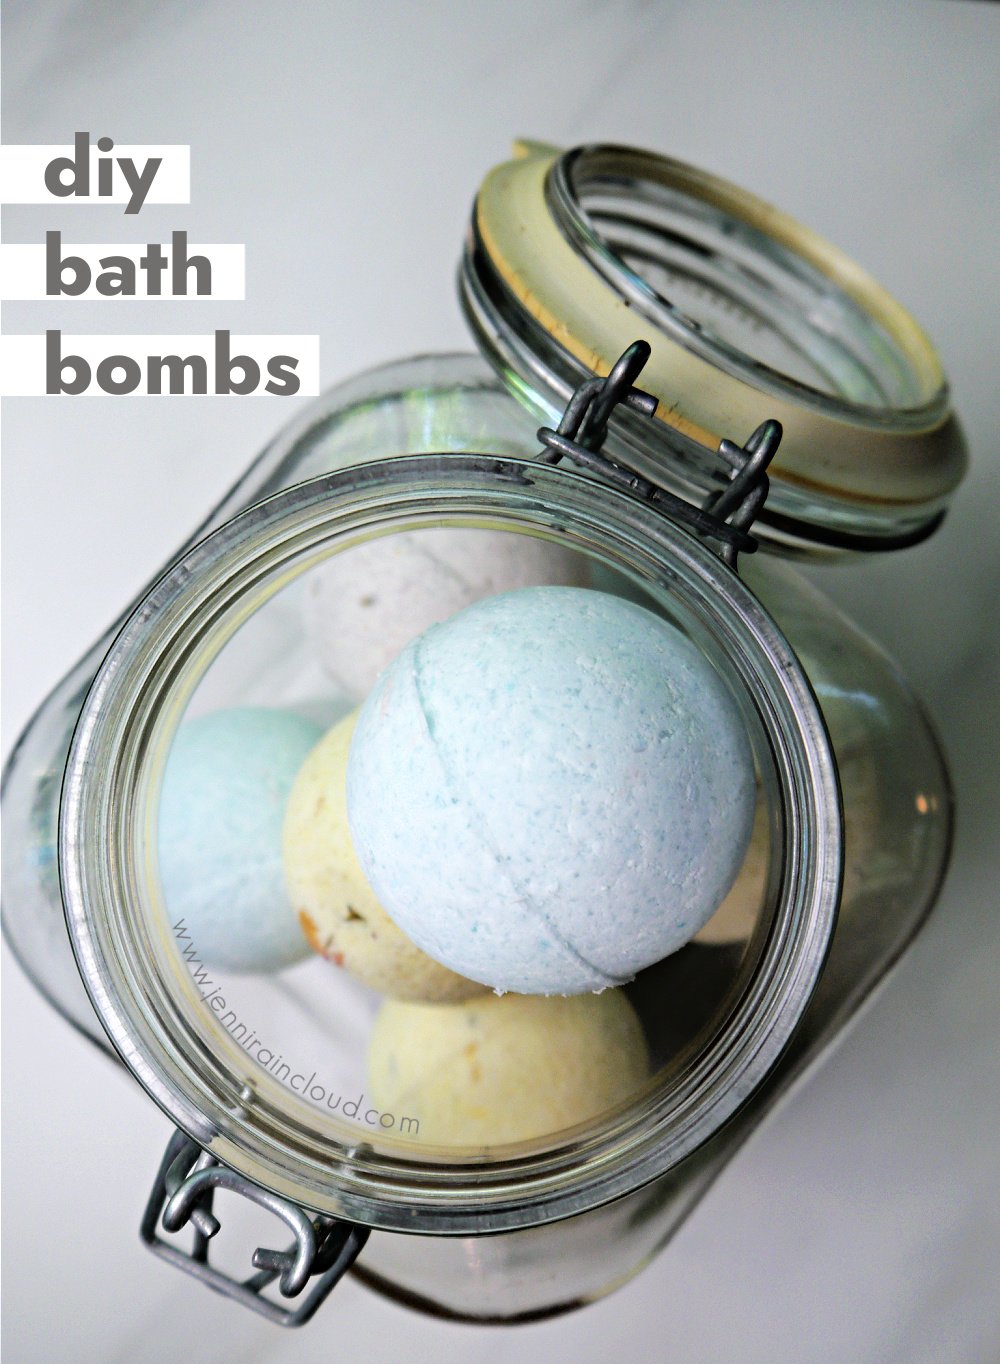 Large jar with bath bombs